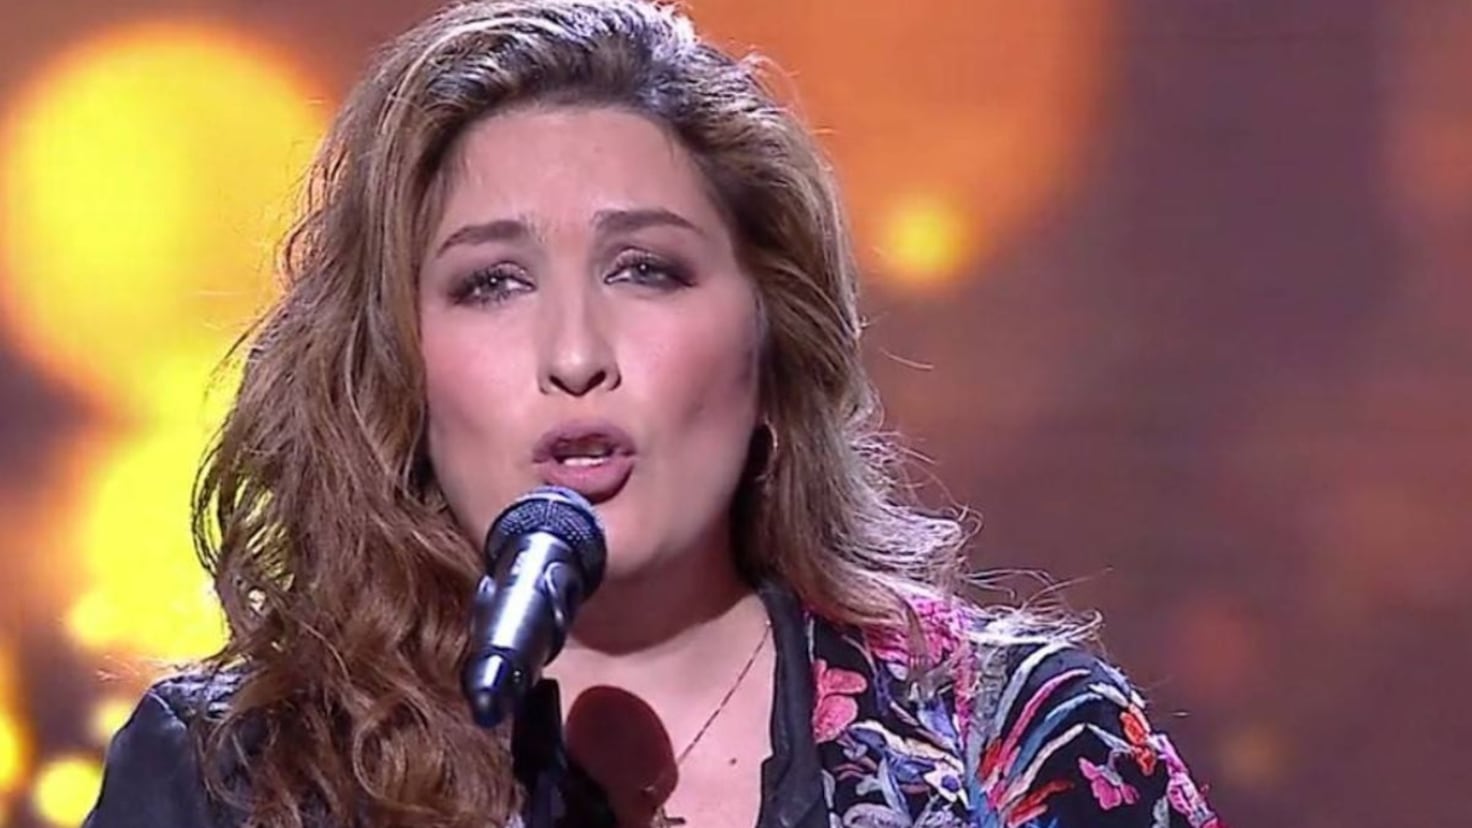 Estrella Morente cancels a concert after undergoing emergency surgery
